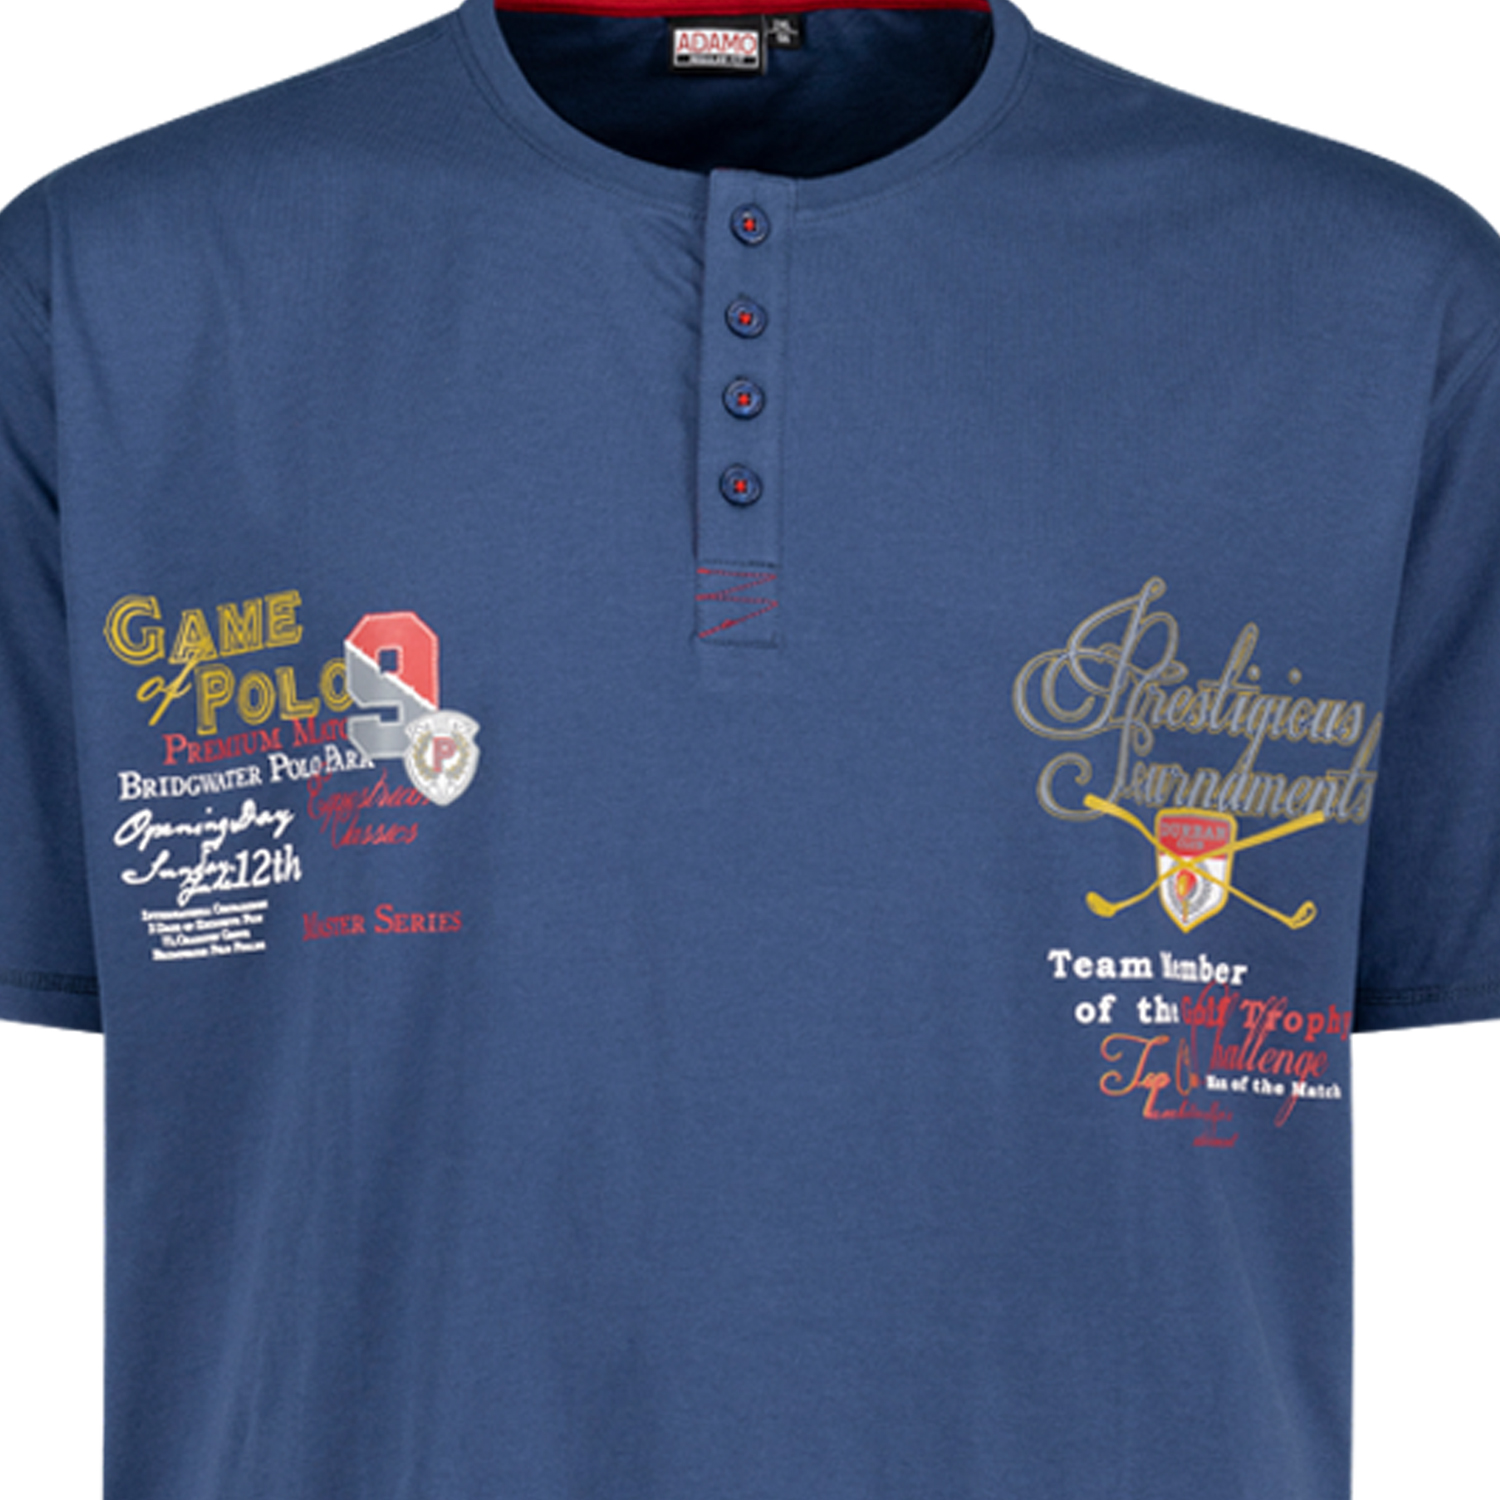 Serafino T-shirt série DUNDEE by ADAMO jusqu'à la grande taille 12XL - couleur: bleu